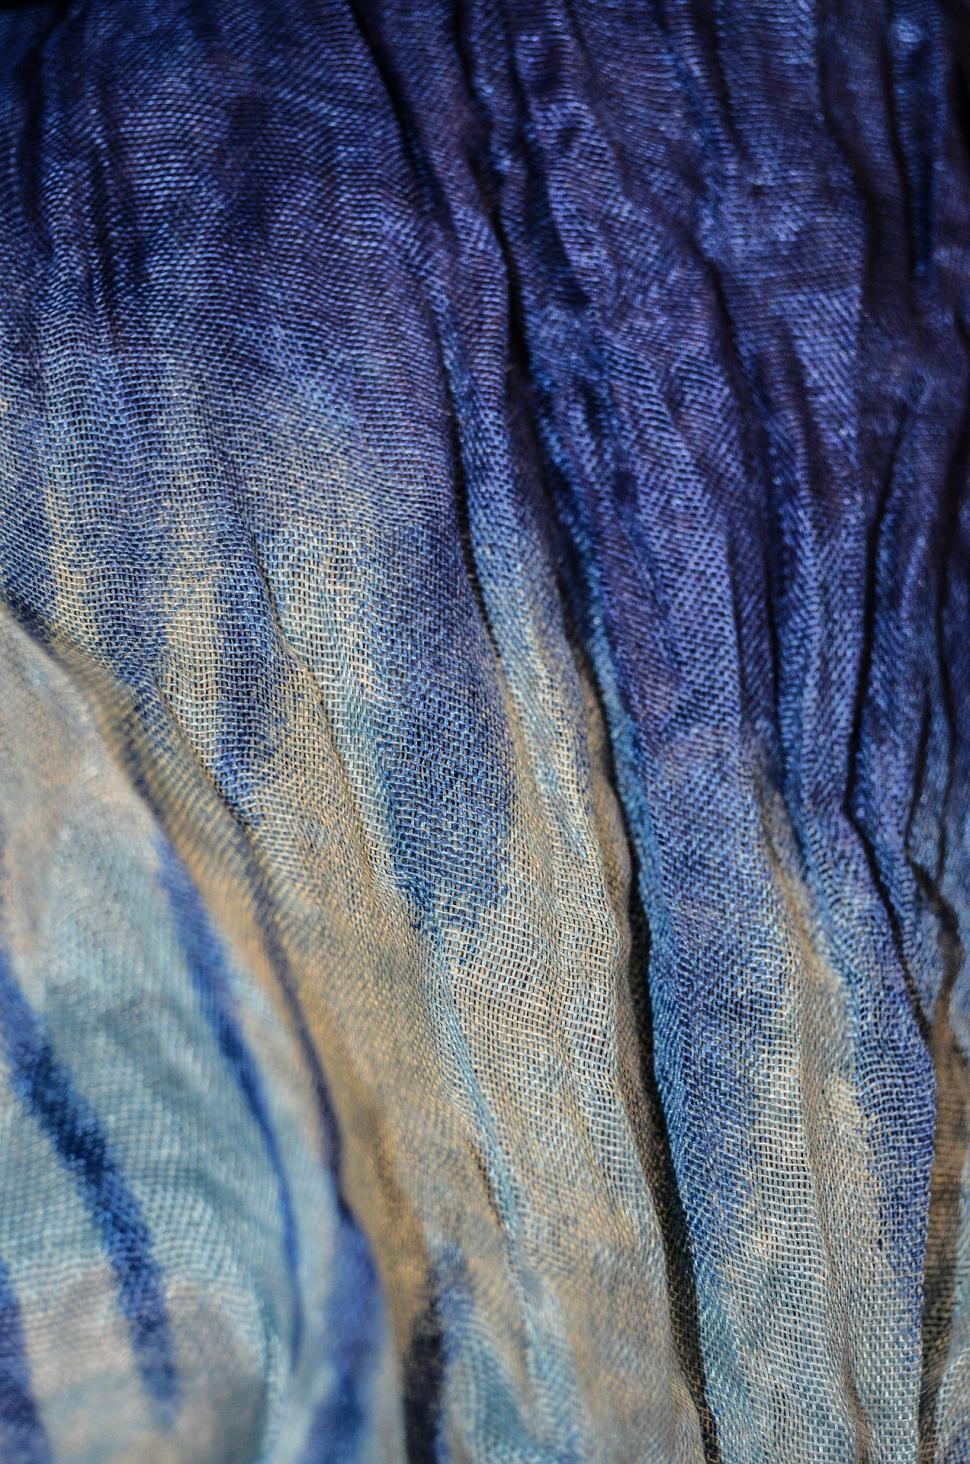 Free Image of velvet fabric texture pattern silk design wallpaper 